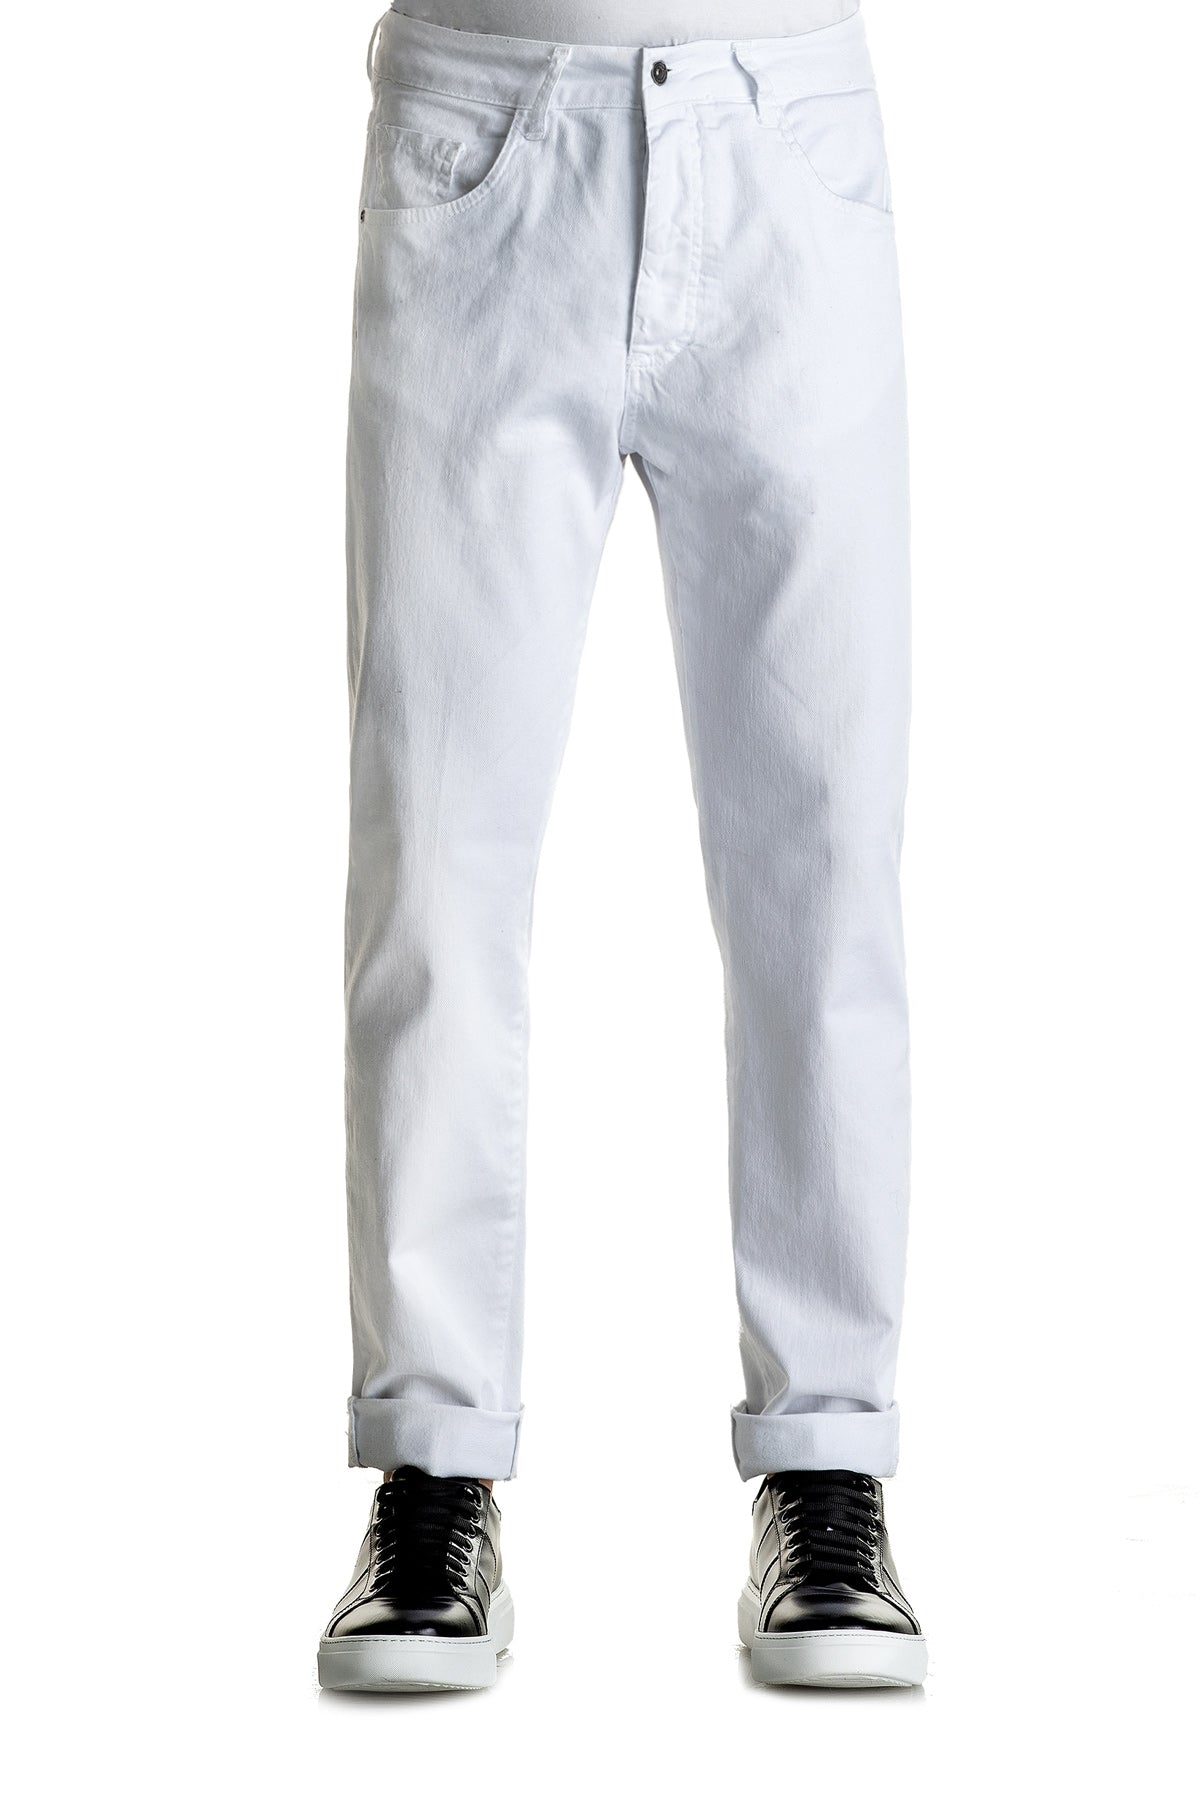 Regular fit white Stamford jeans